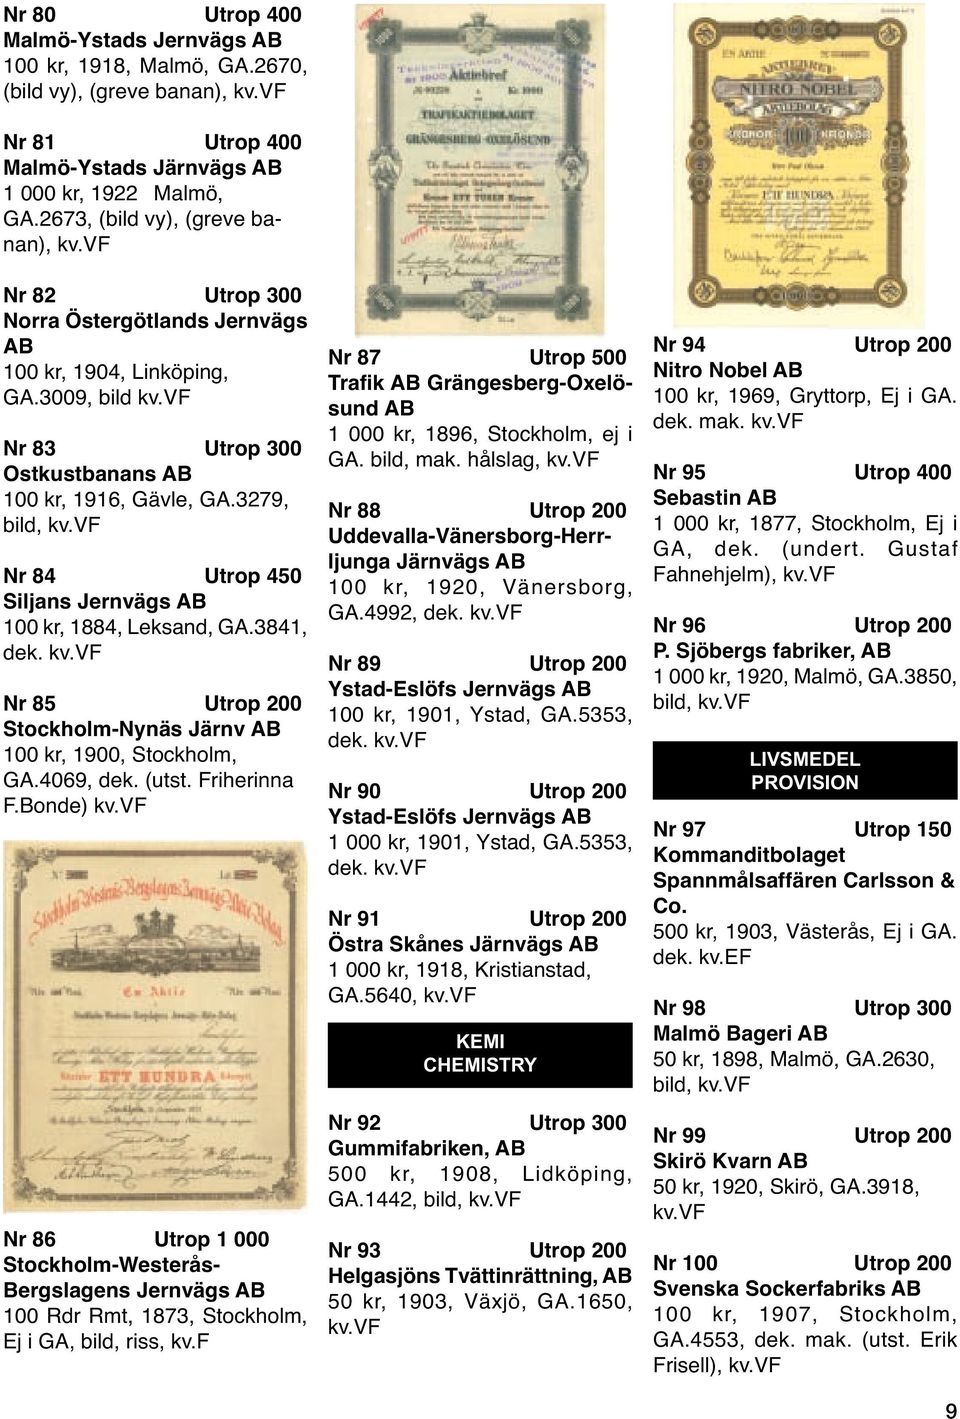 3279, bild, Nr 84 Utrop 450 Siljans Jernvägs 100 kr, 1884, Leksand, GA.3841, dek. Nr 85 Utrop 200 Stockholm-Nynäs Järnv 100 kr, 1900, Stockholm, GA.4069, dek. (utst. Friherinna F.